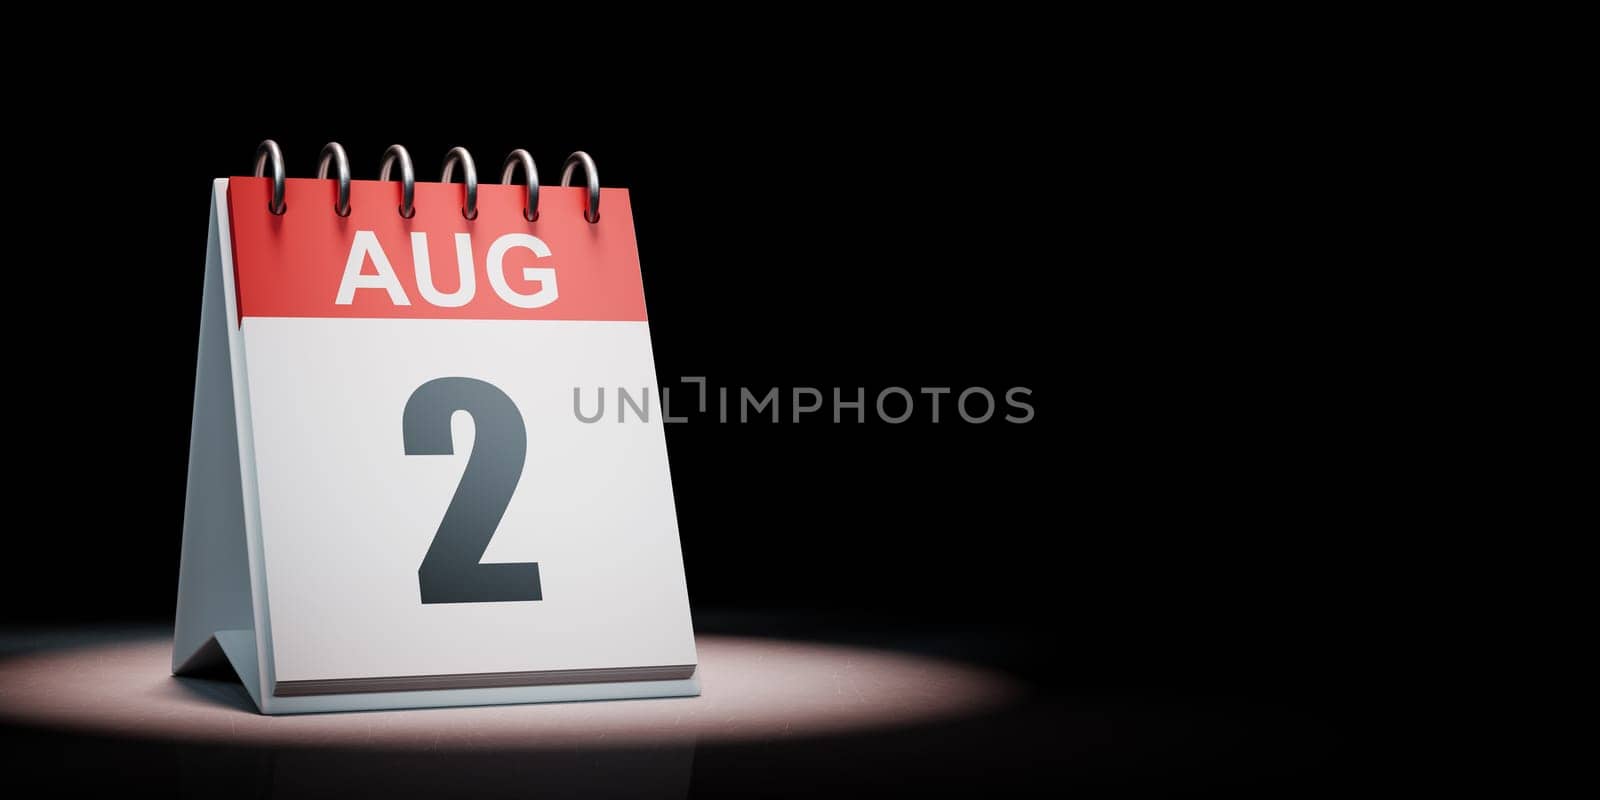 August 2 Calendar Spotlighted on Black Background by make